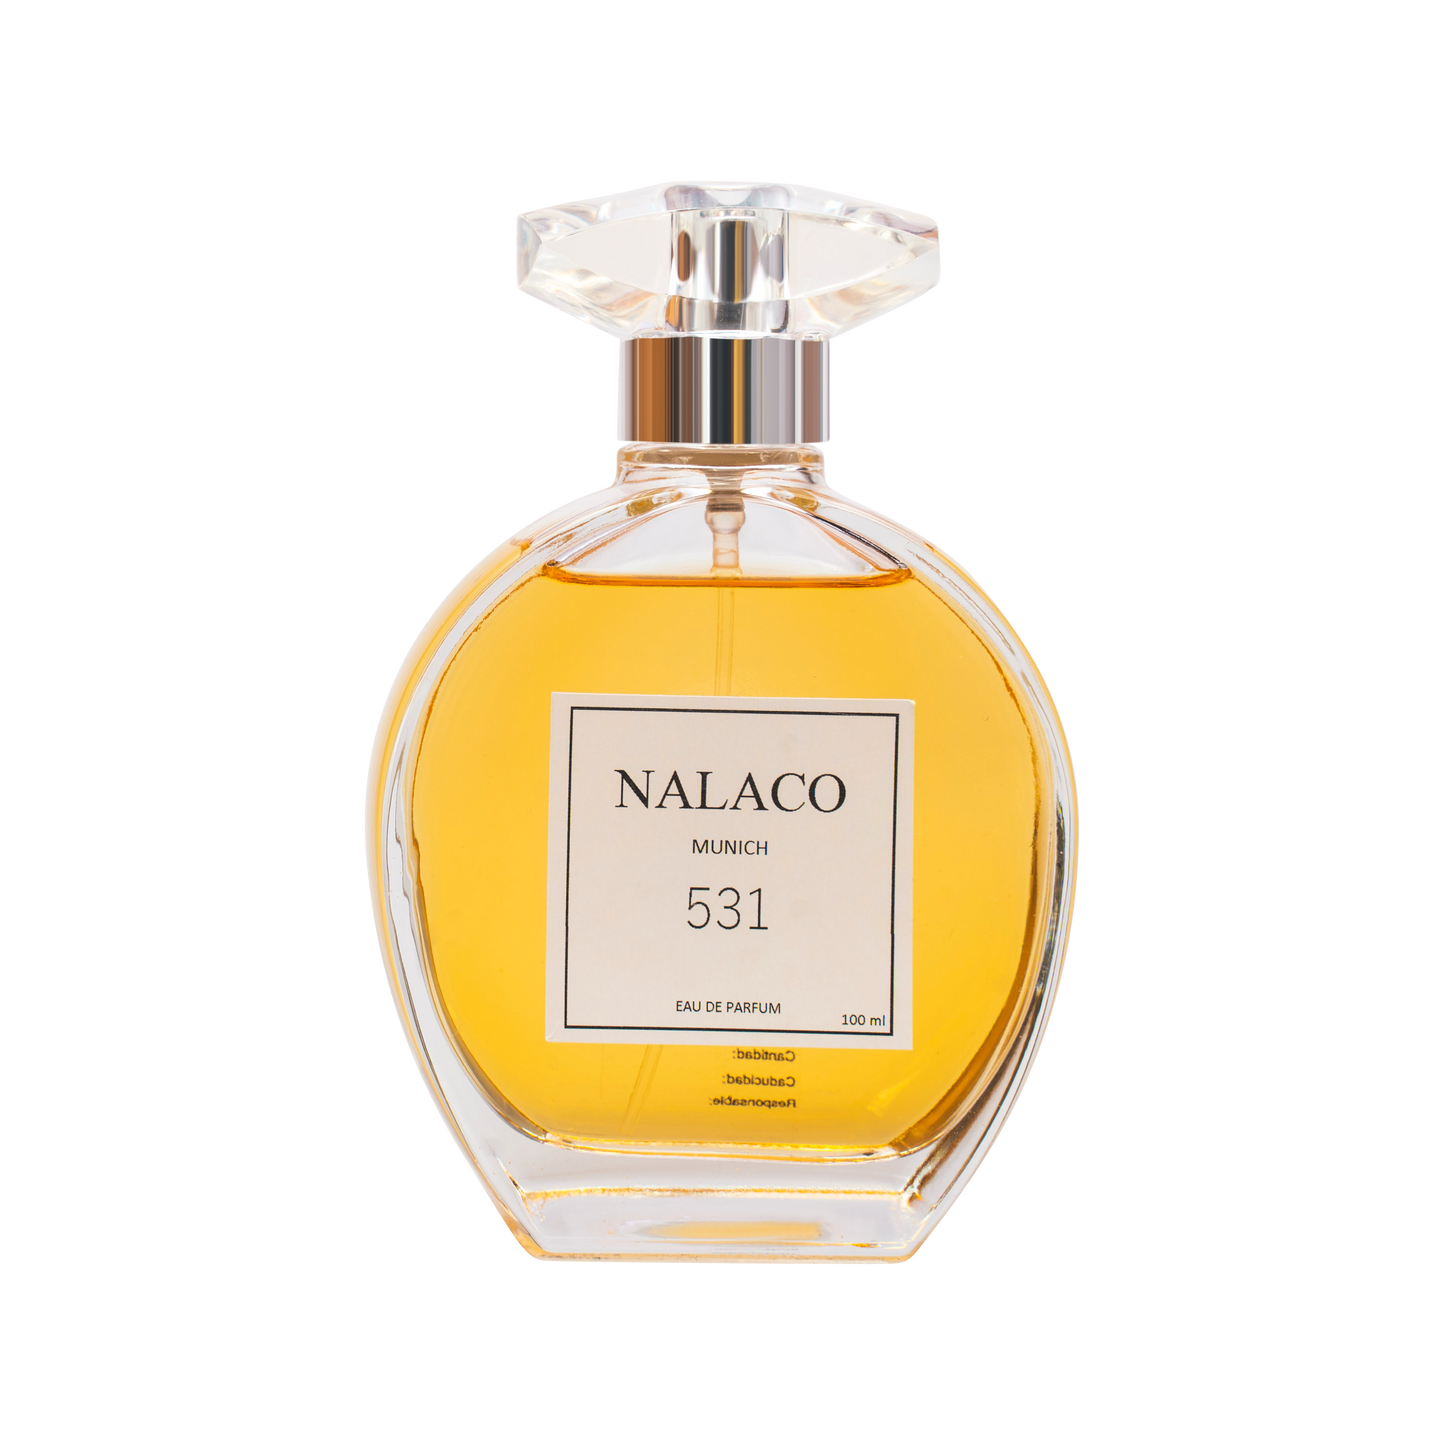 Nalaco No. 531 inspired by Paco Rabanne Lady Million Empire